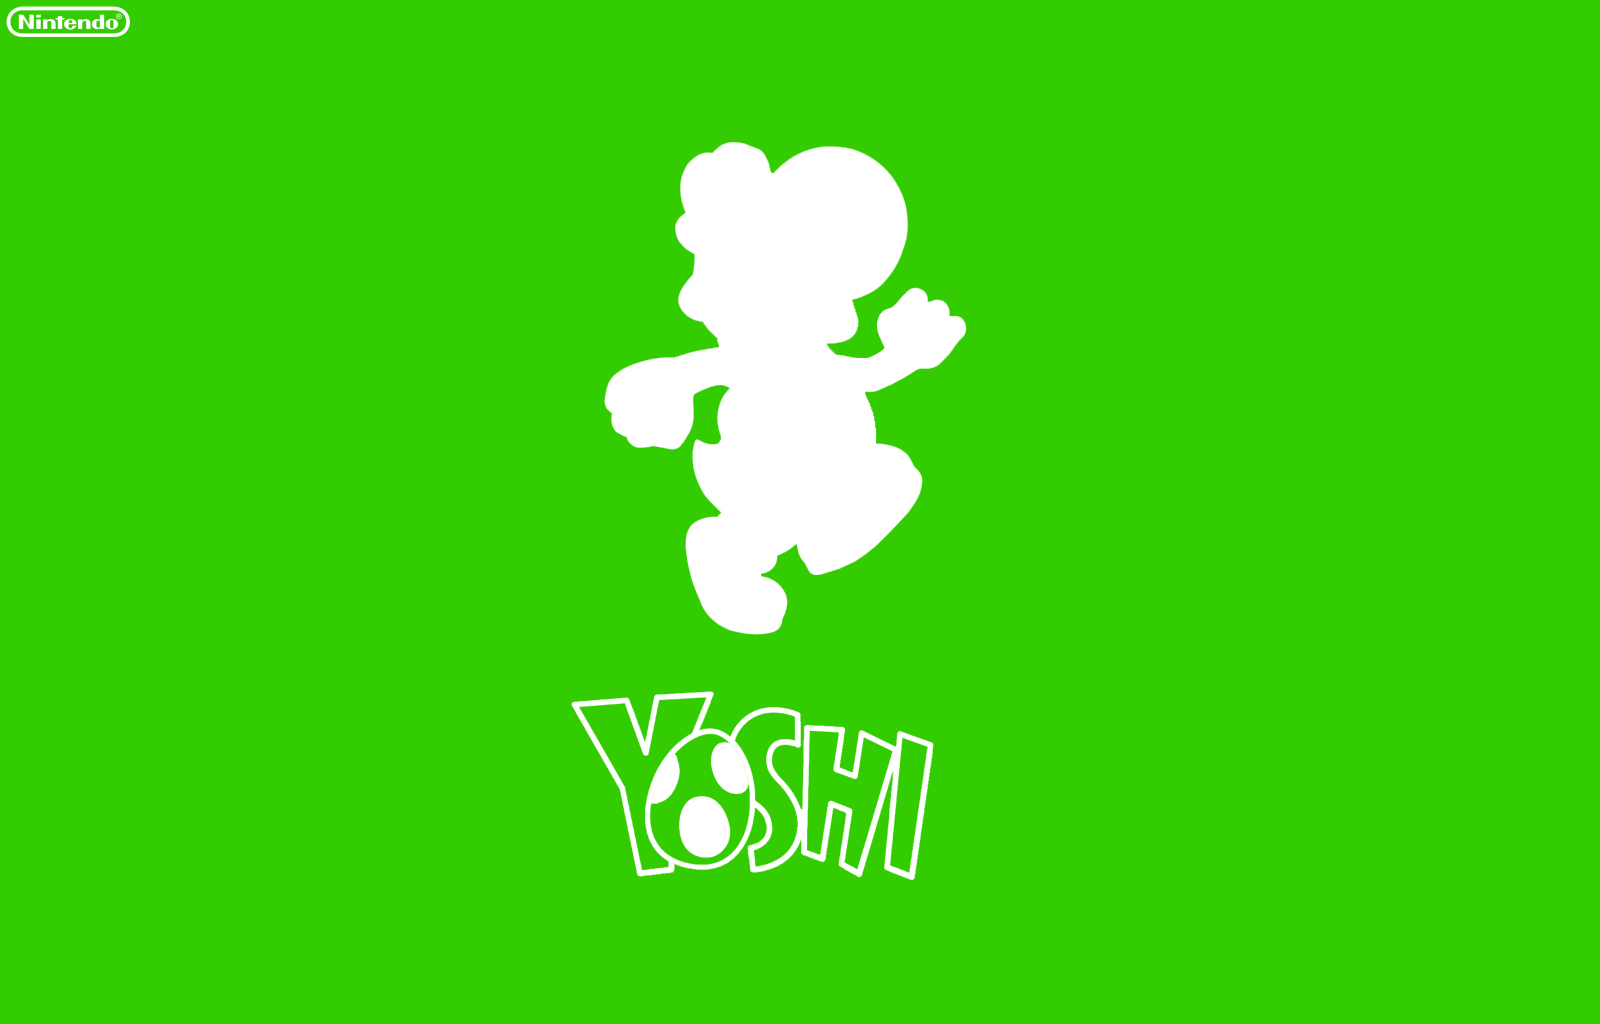 Nintendo Yoshi Wallpaper Green By Daanandcasper